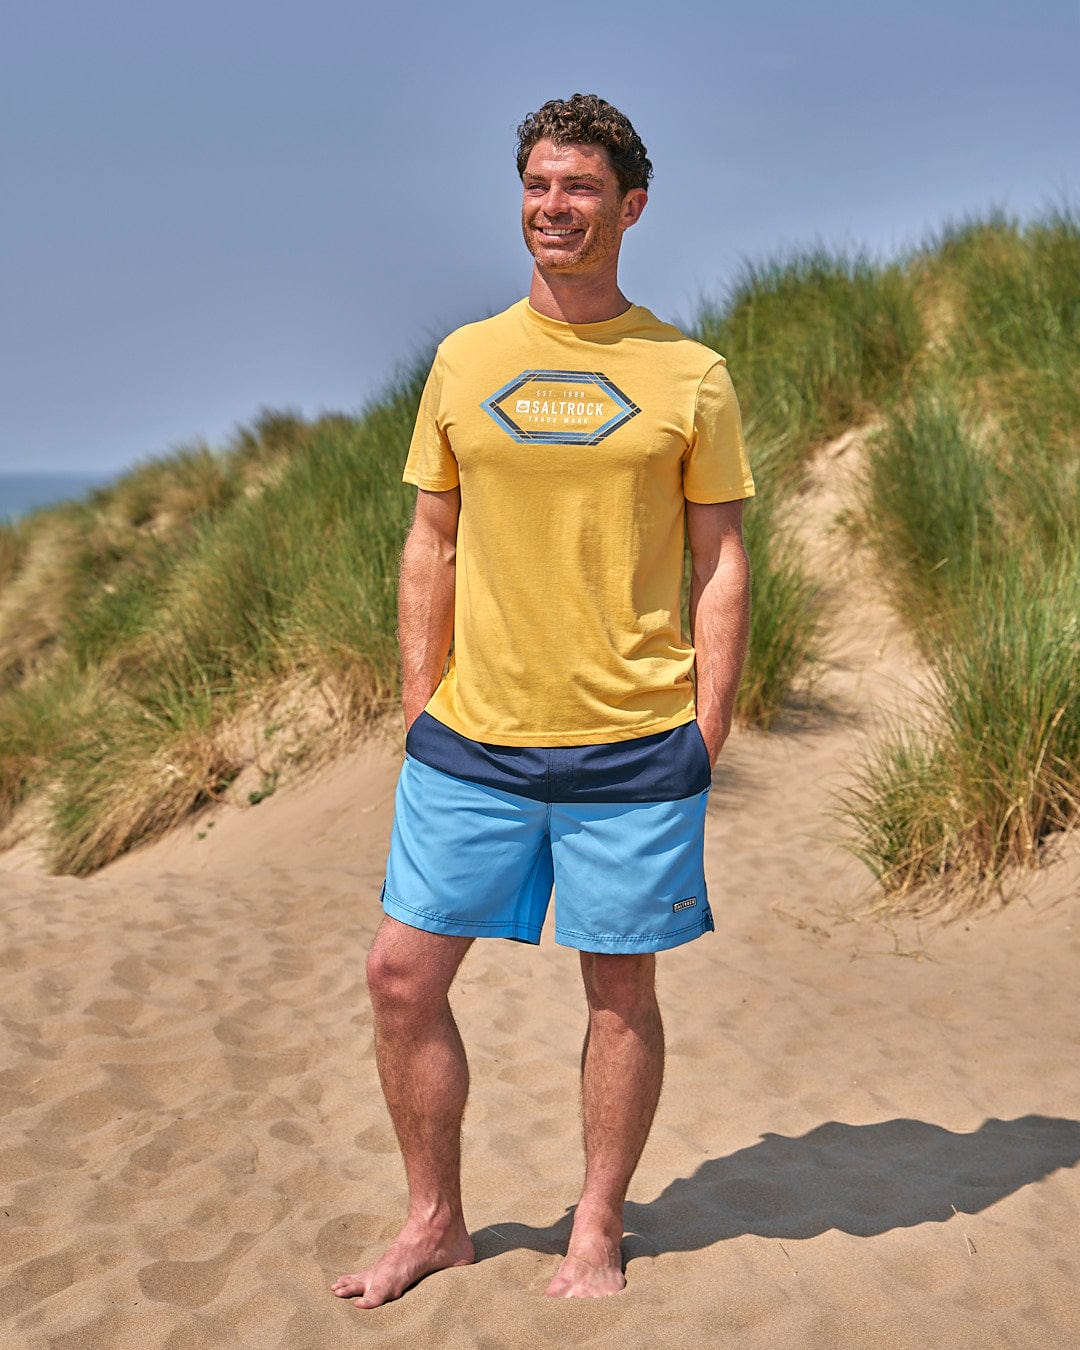 A man in a yellow Gradient Hex - Mens Short Sleeve T-Shirt - Yellow Saltrock standing on a sand dune.